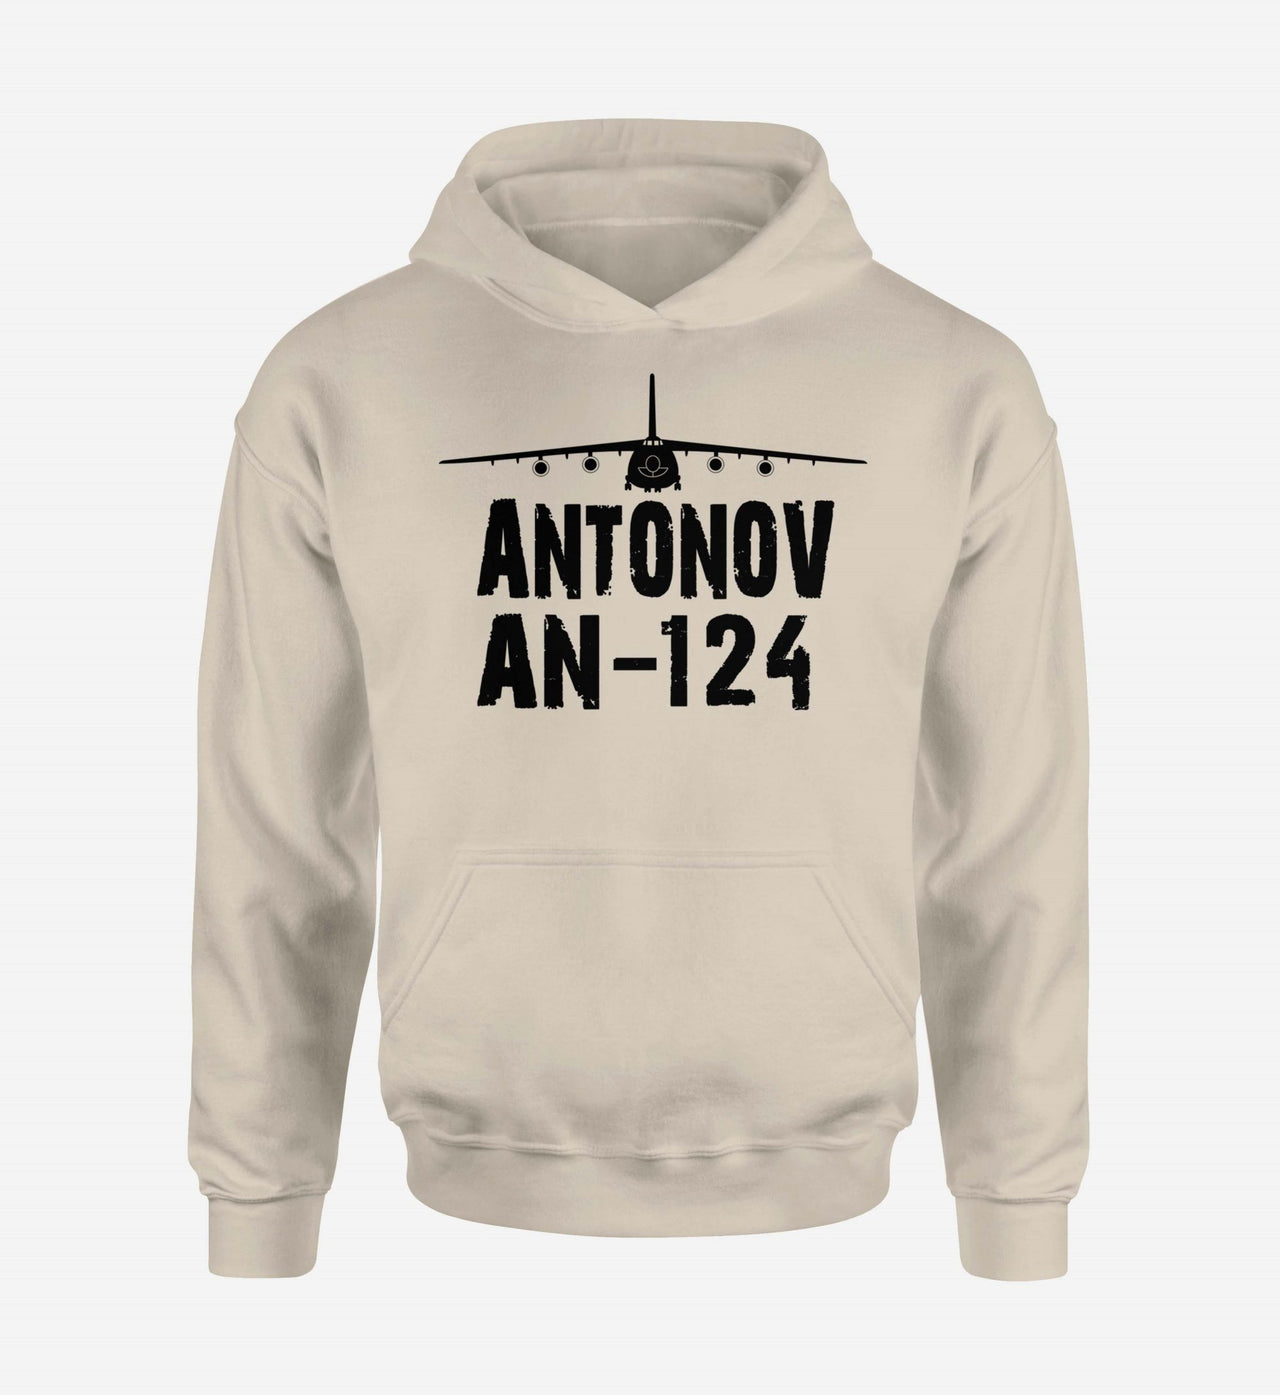 Antonov AN-124 & Plane Designed Hoodies